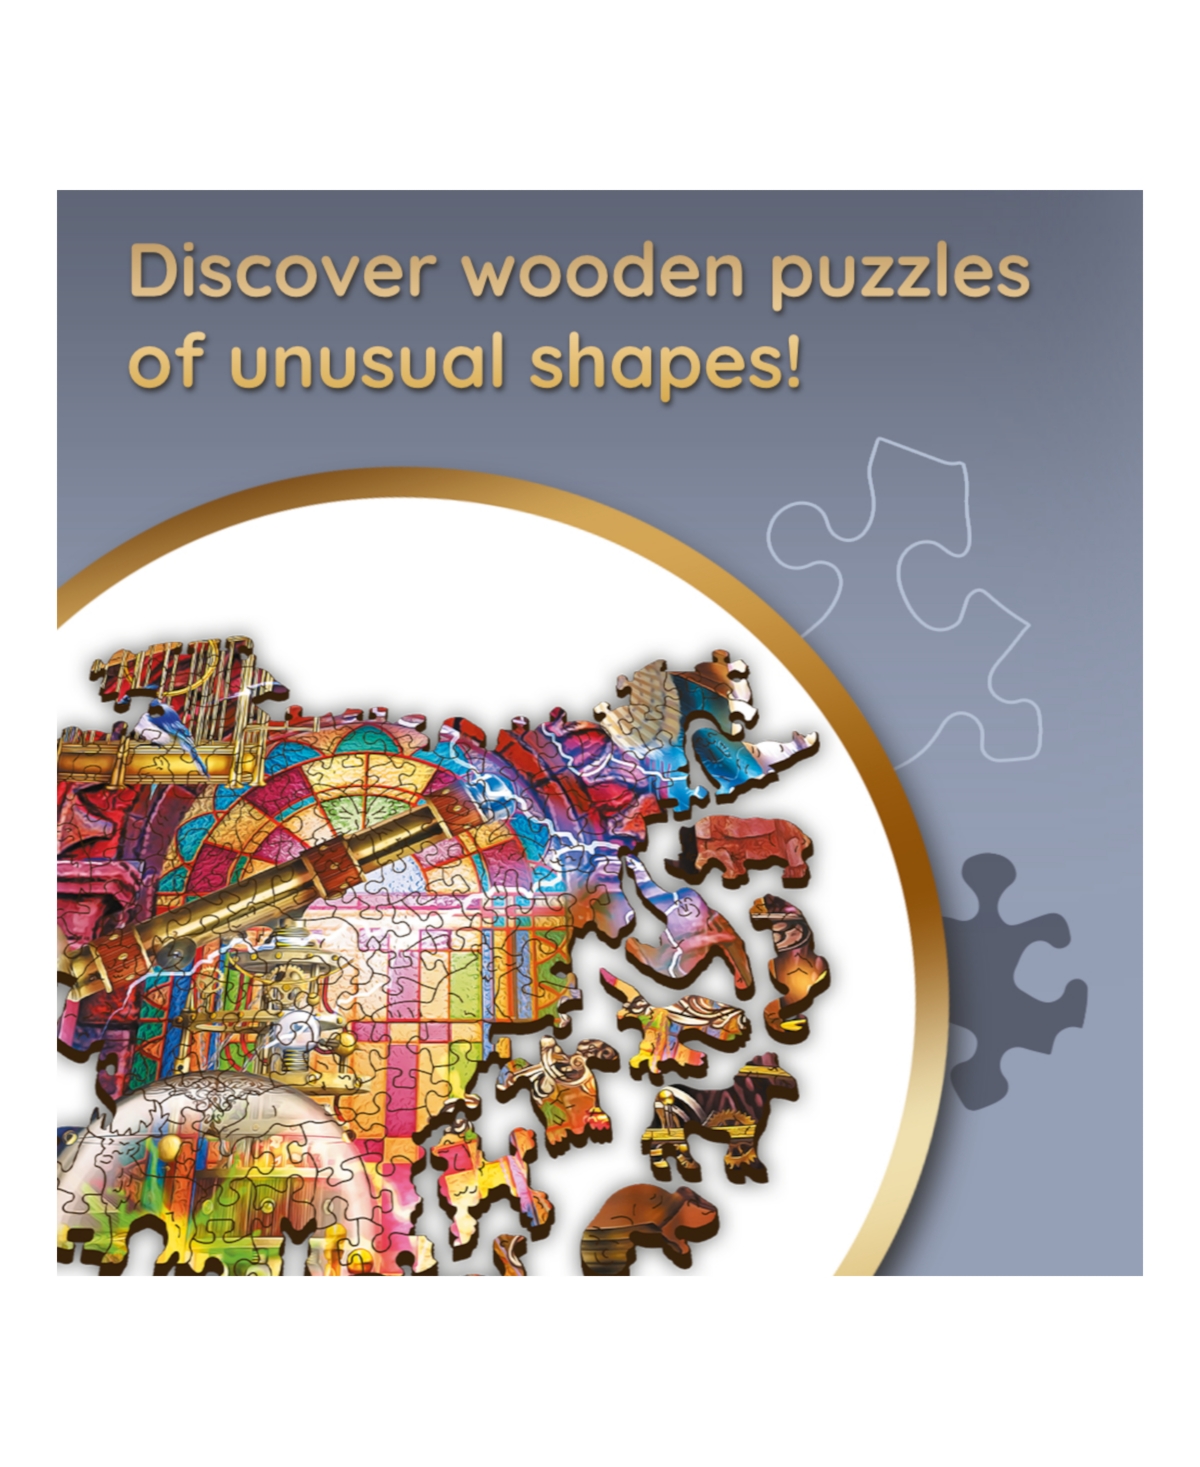 Shop Trefl Wood Craft 1000 Piece Wooden Puzzle In Multi